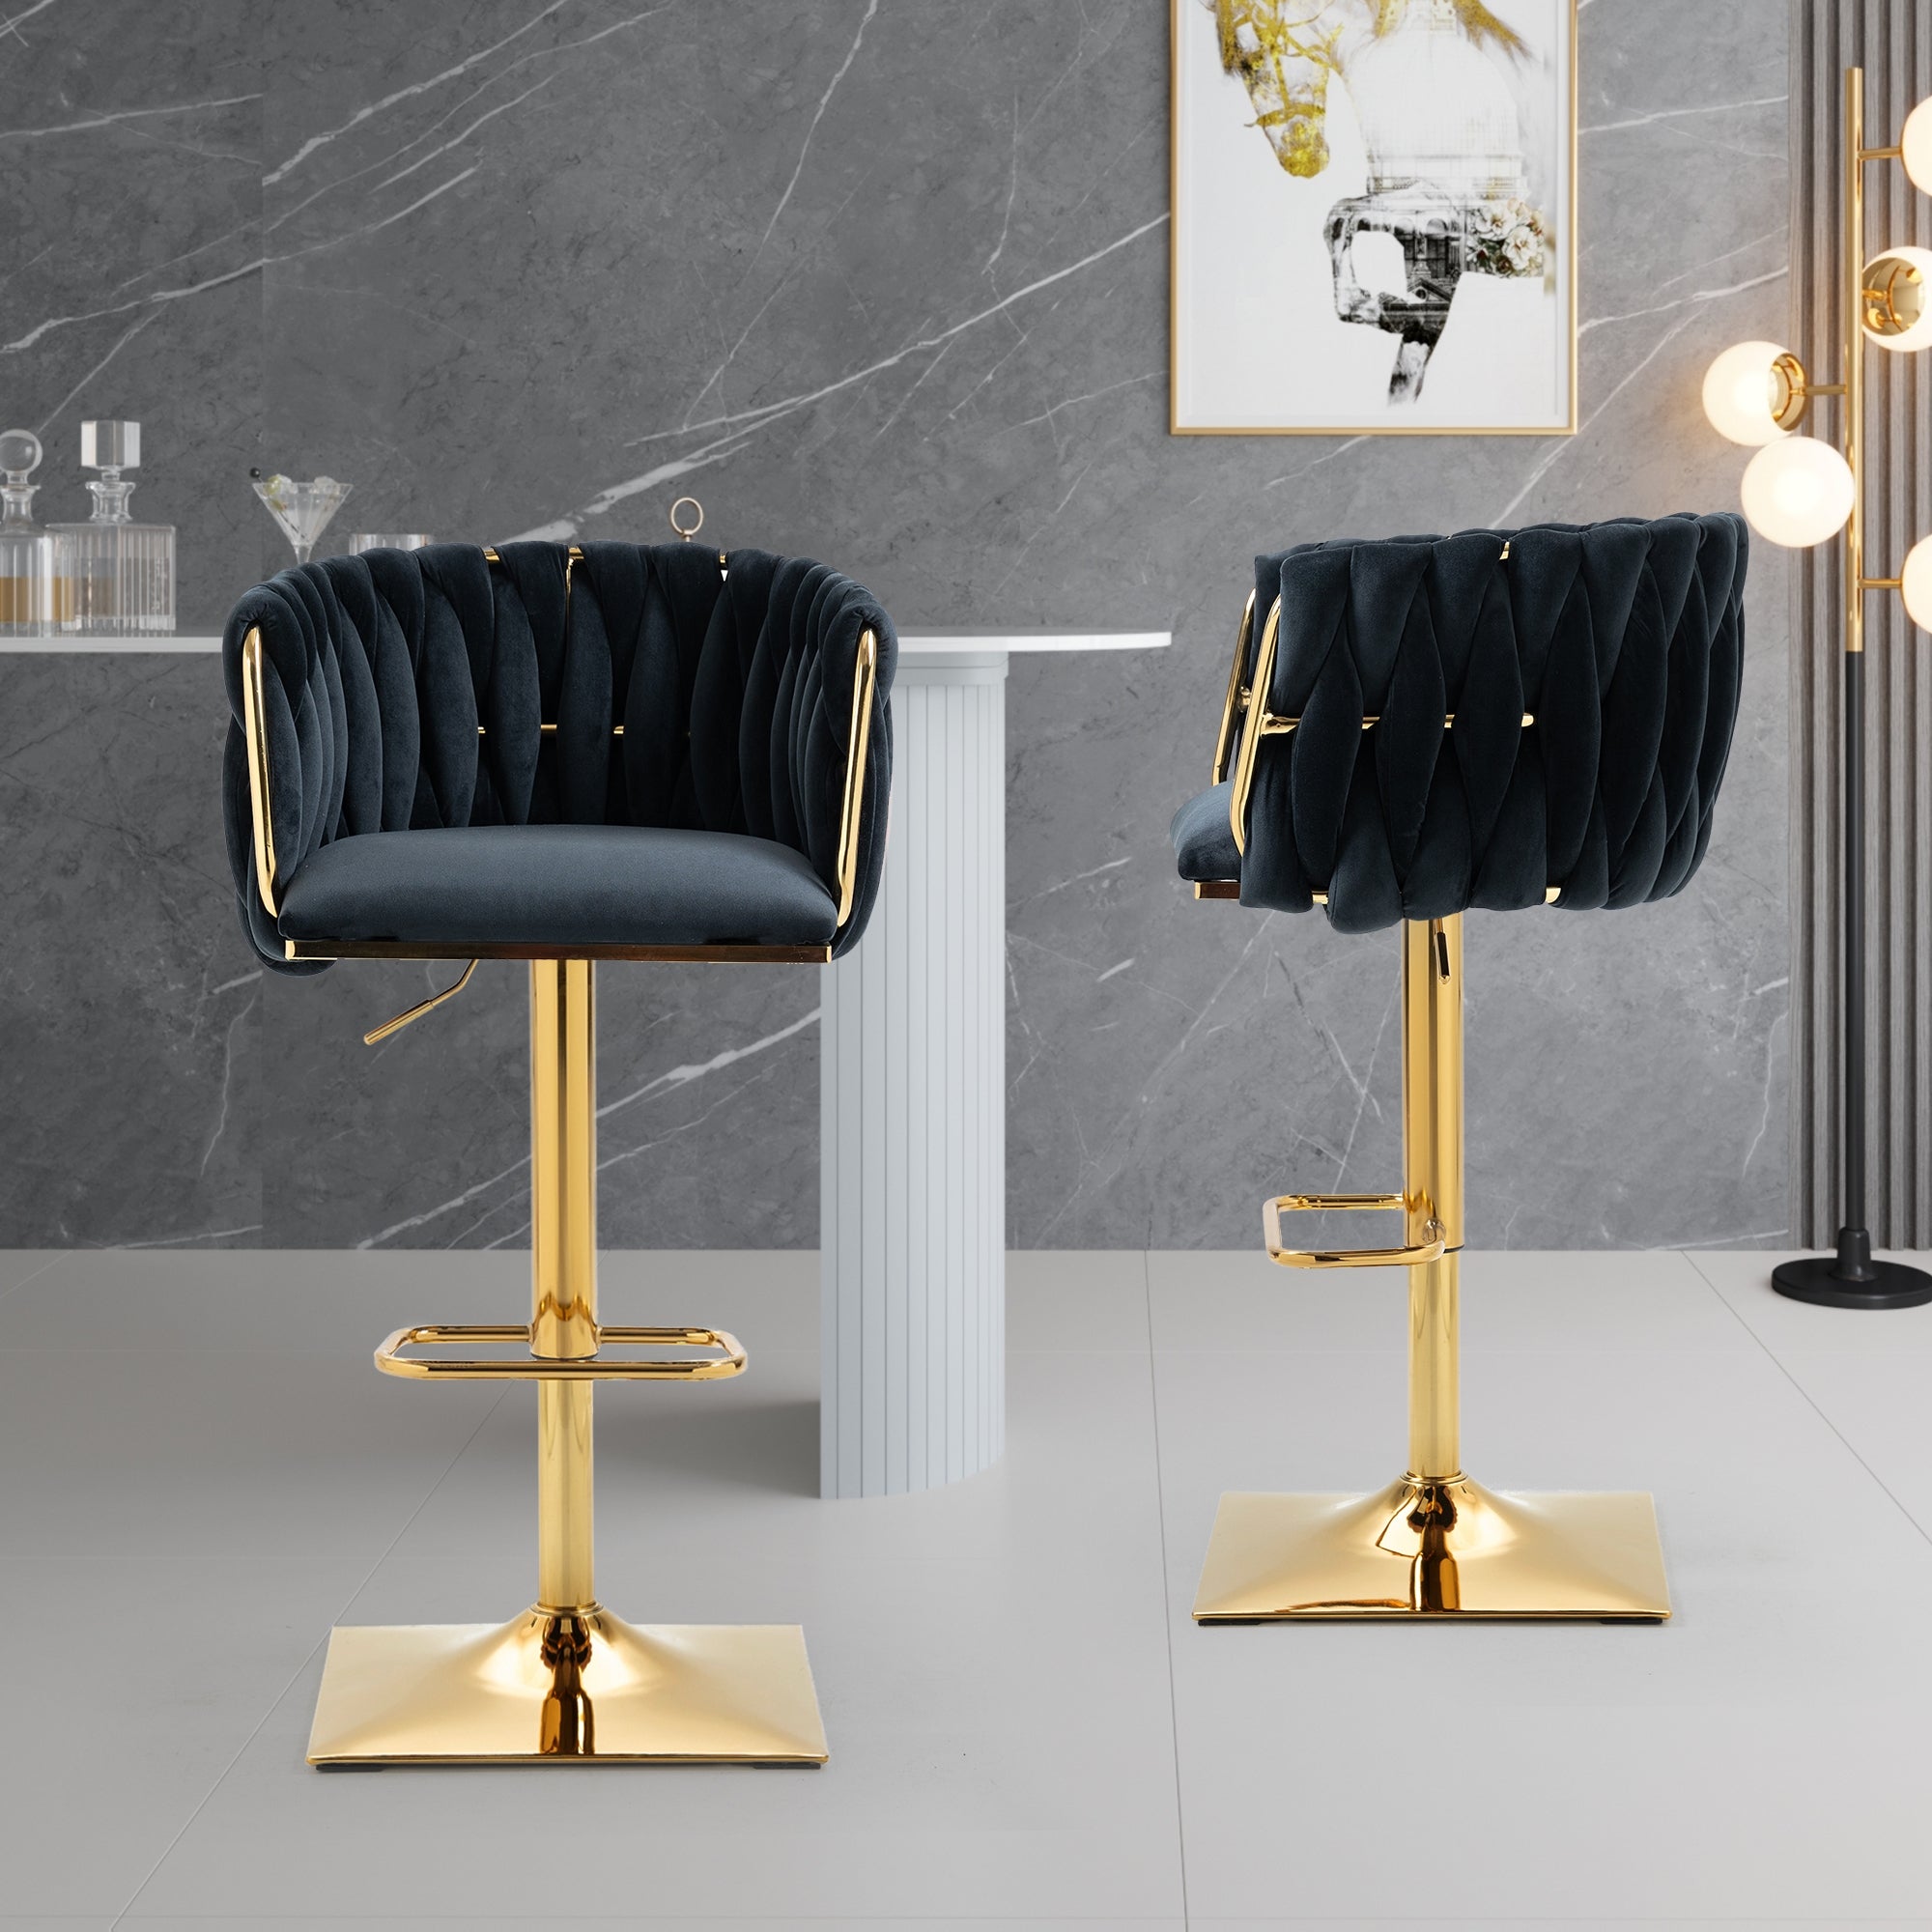 Set of 2 Luxury Velvet Modern Swivel Adjustable Height Barstools with Gold finish legs